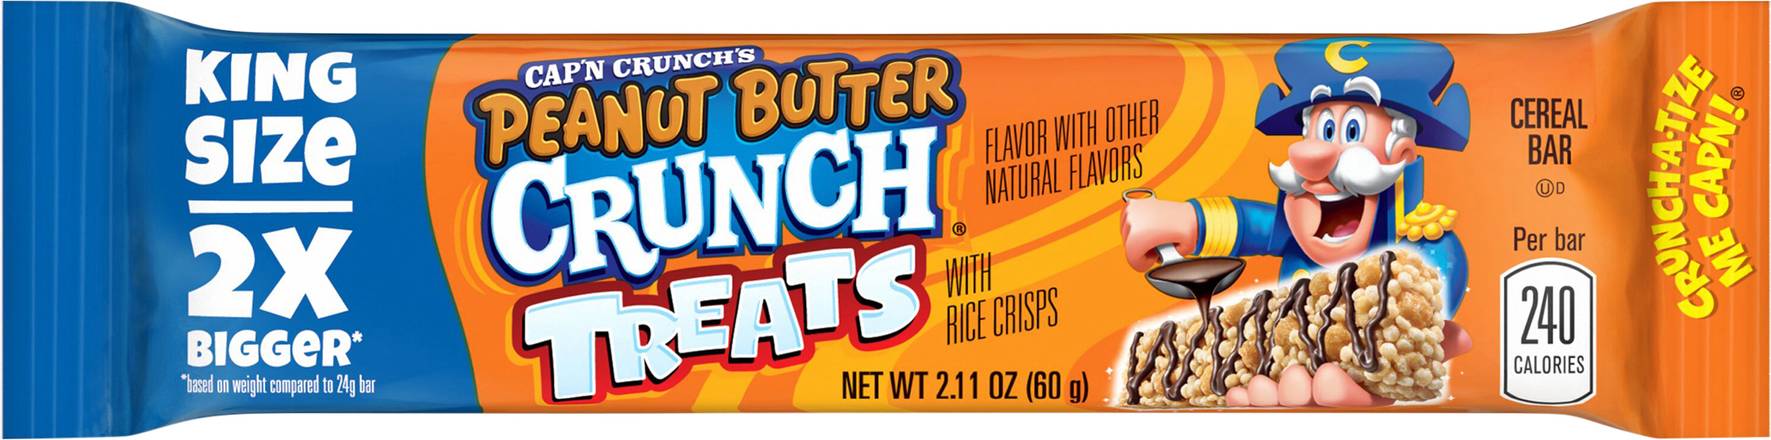 Cap'n Crunch Cereal Bar With Rice Crisps Peanut Butter Crunch